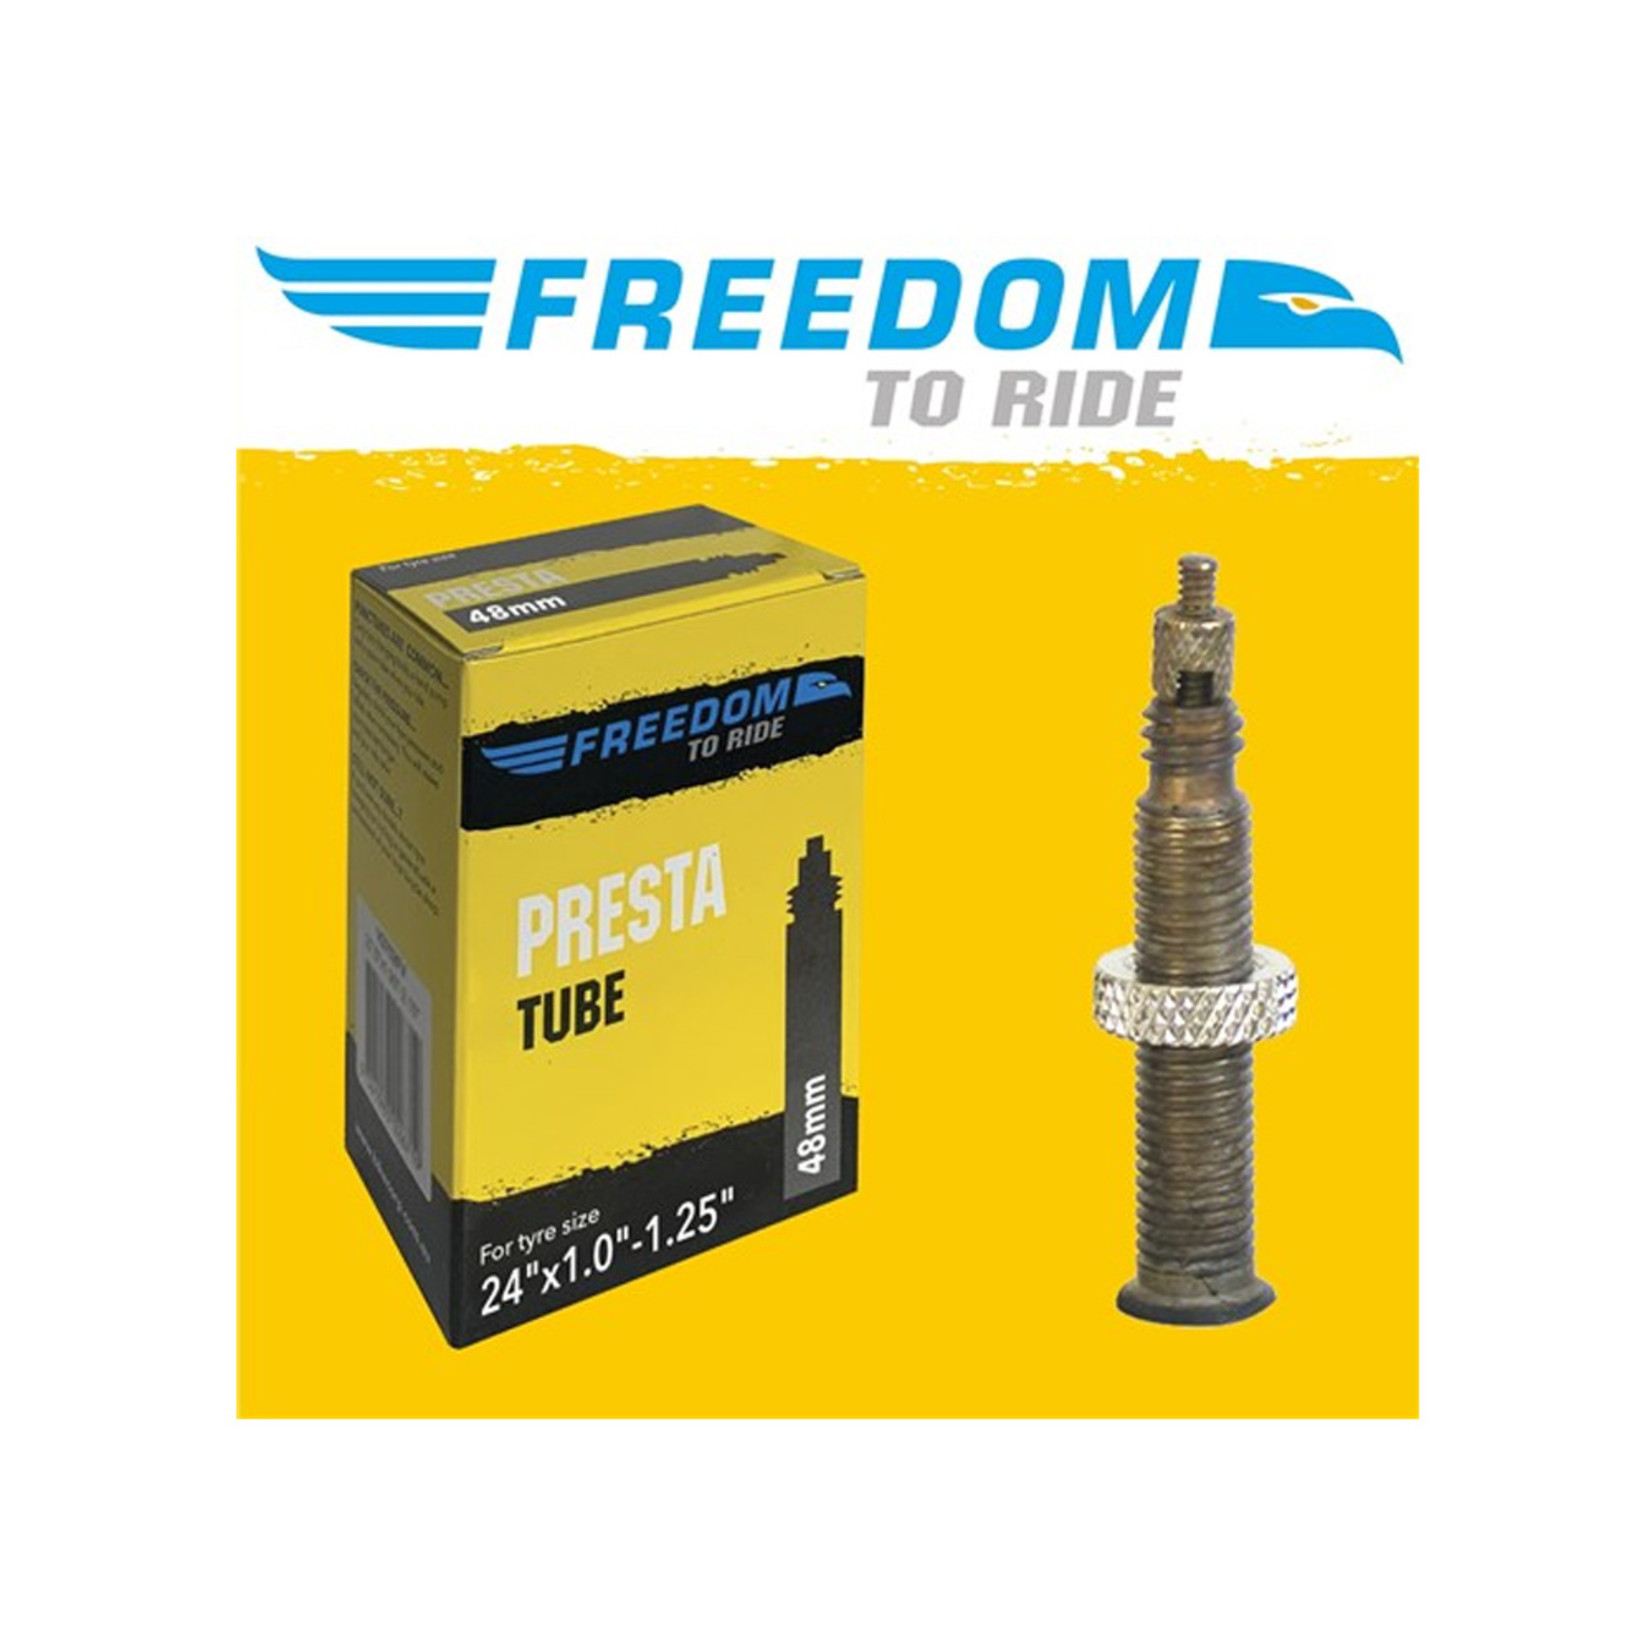 Freedom Freedom Bike Tube - 24" X 1.00-1.25" - Presta Valve 48mm